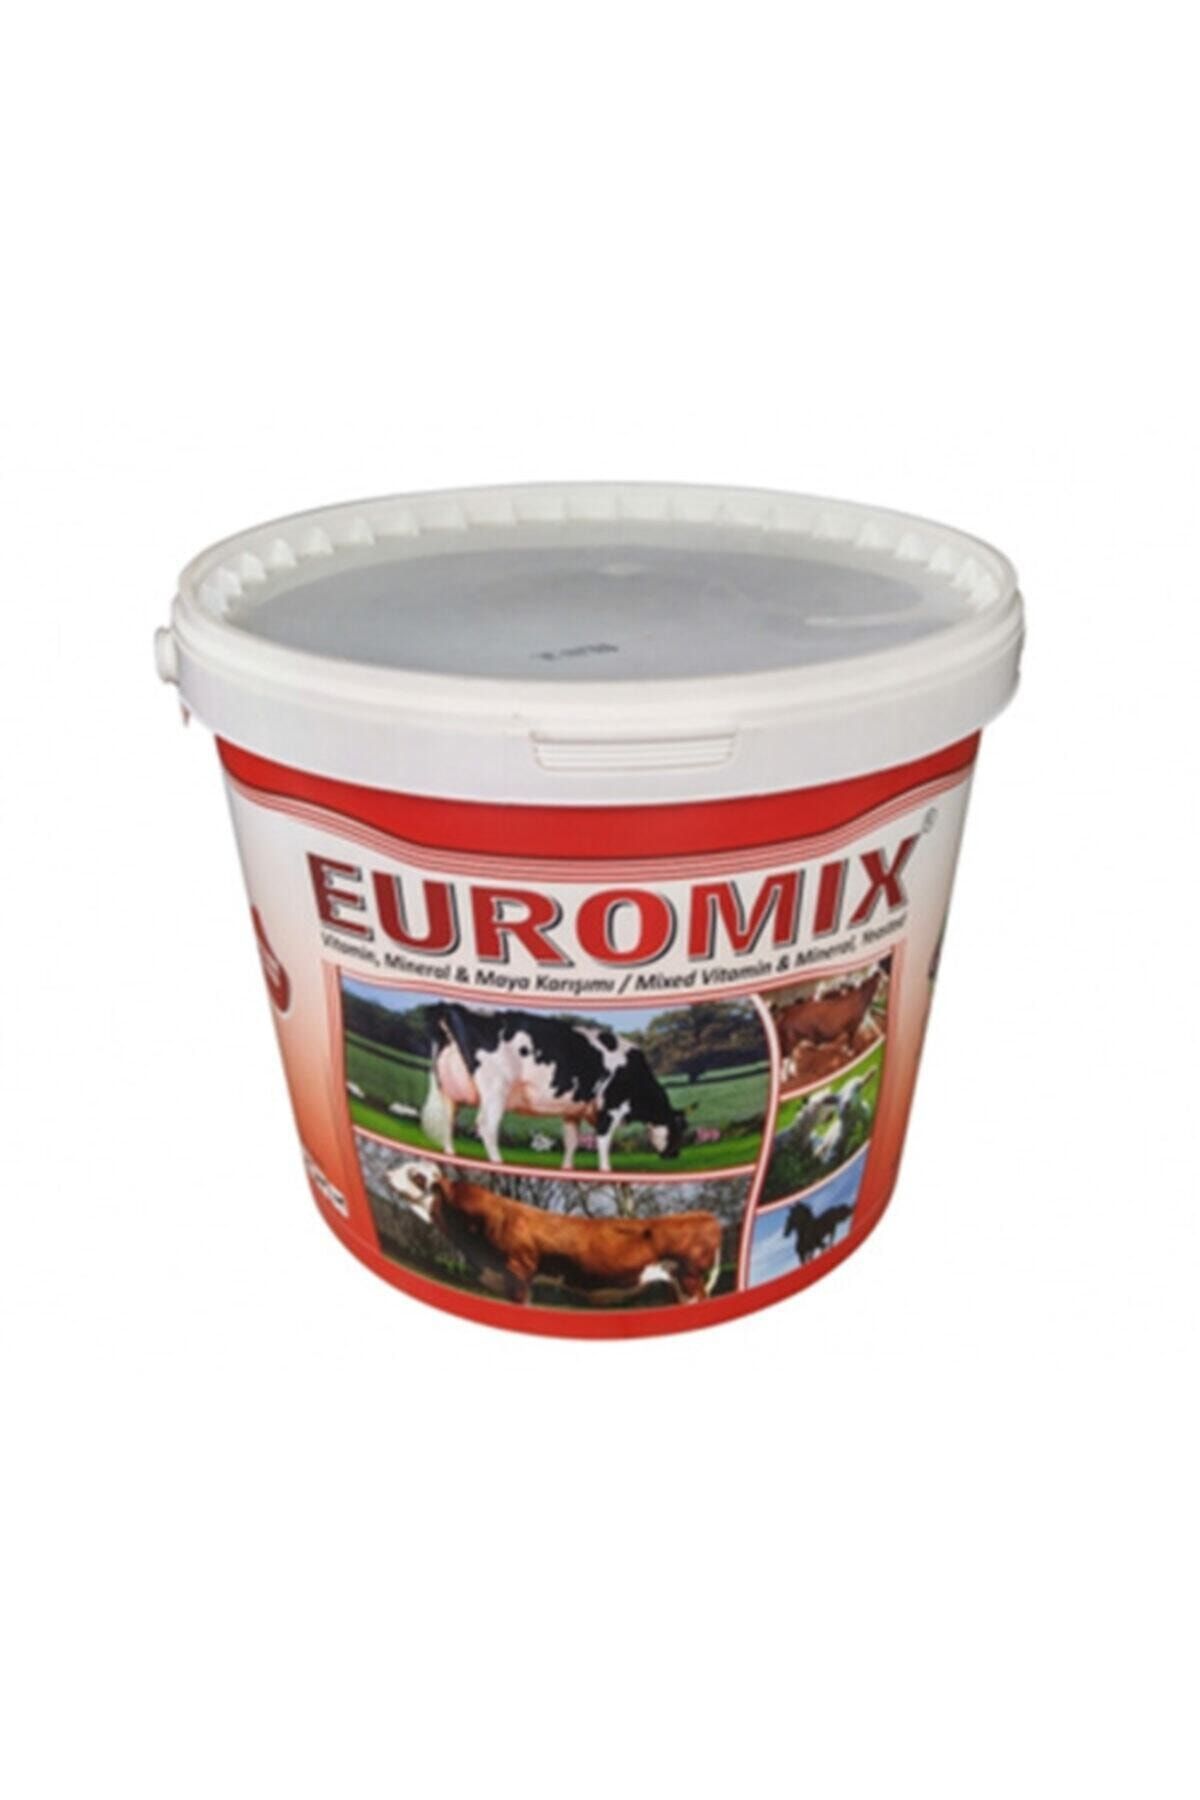 Royal İlaç Euromix Vitamin Mineral Maya Yem Katkısı 25kg